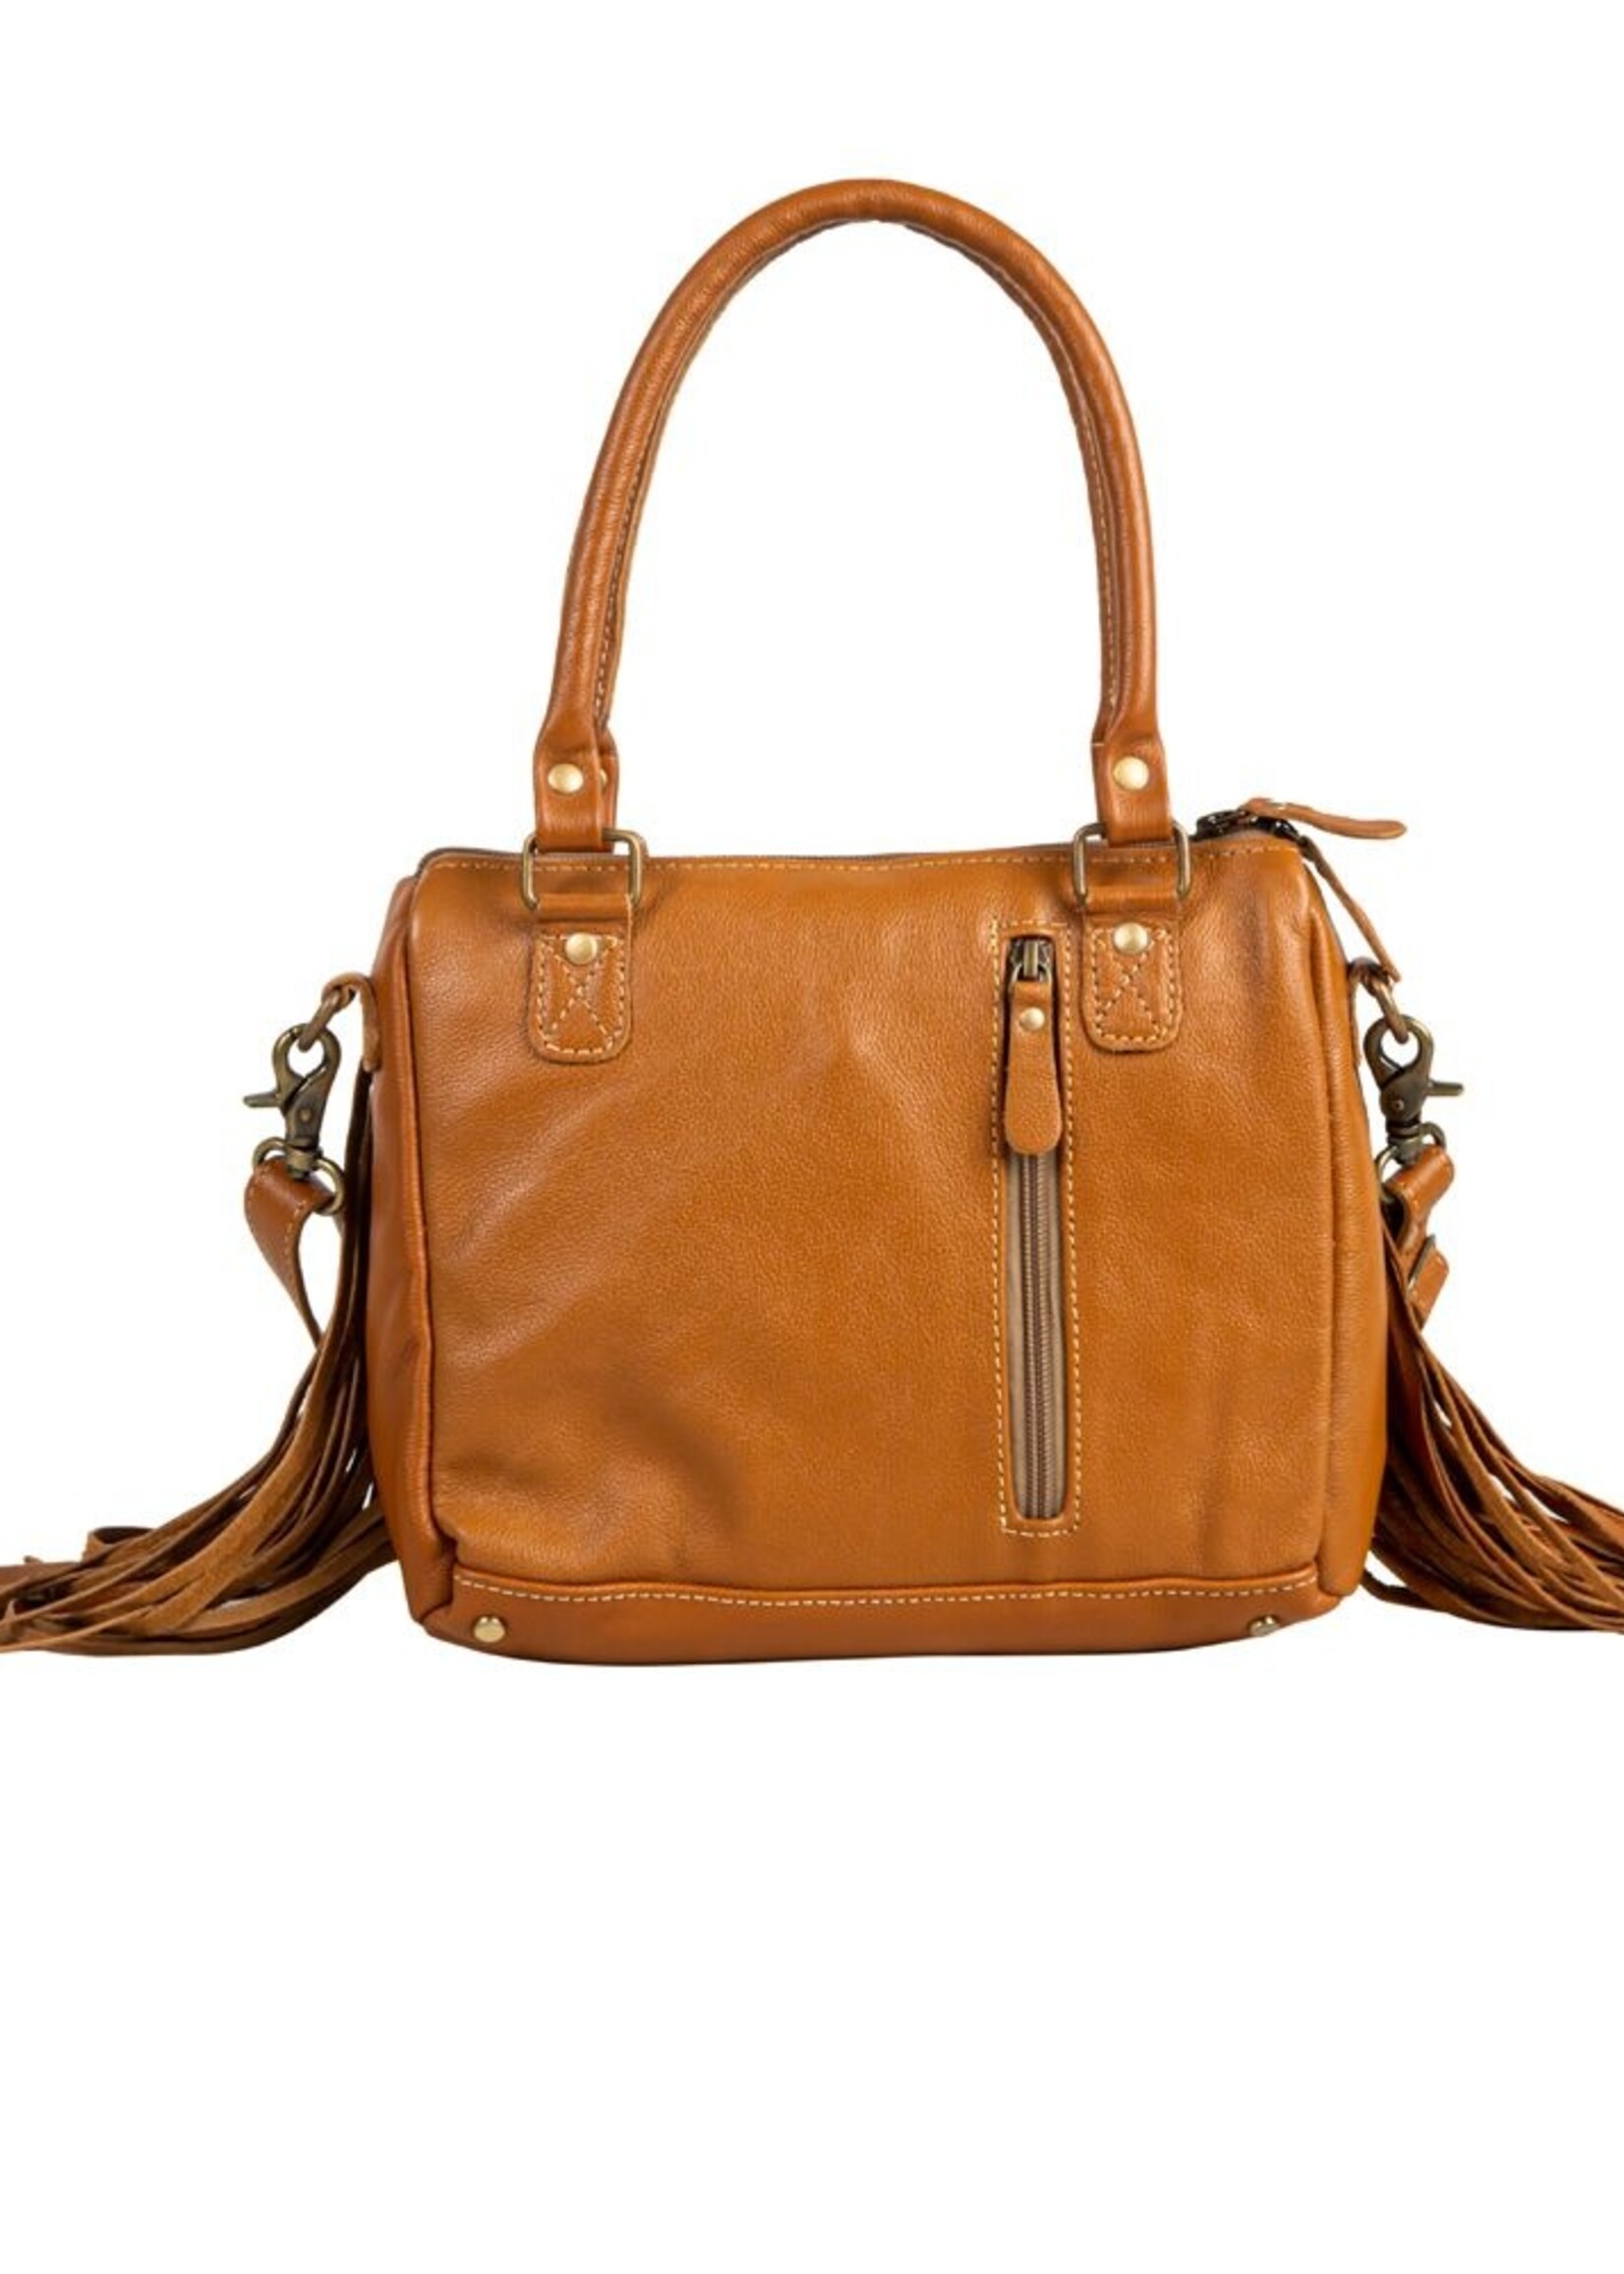 Dakota Plains Conceal and Carry Bag